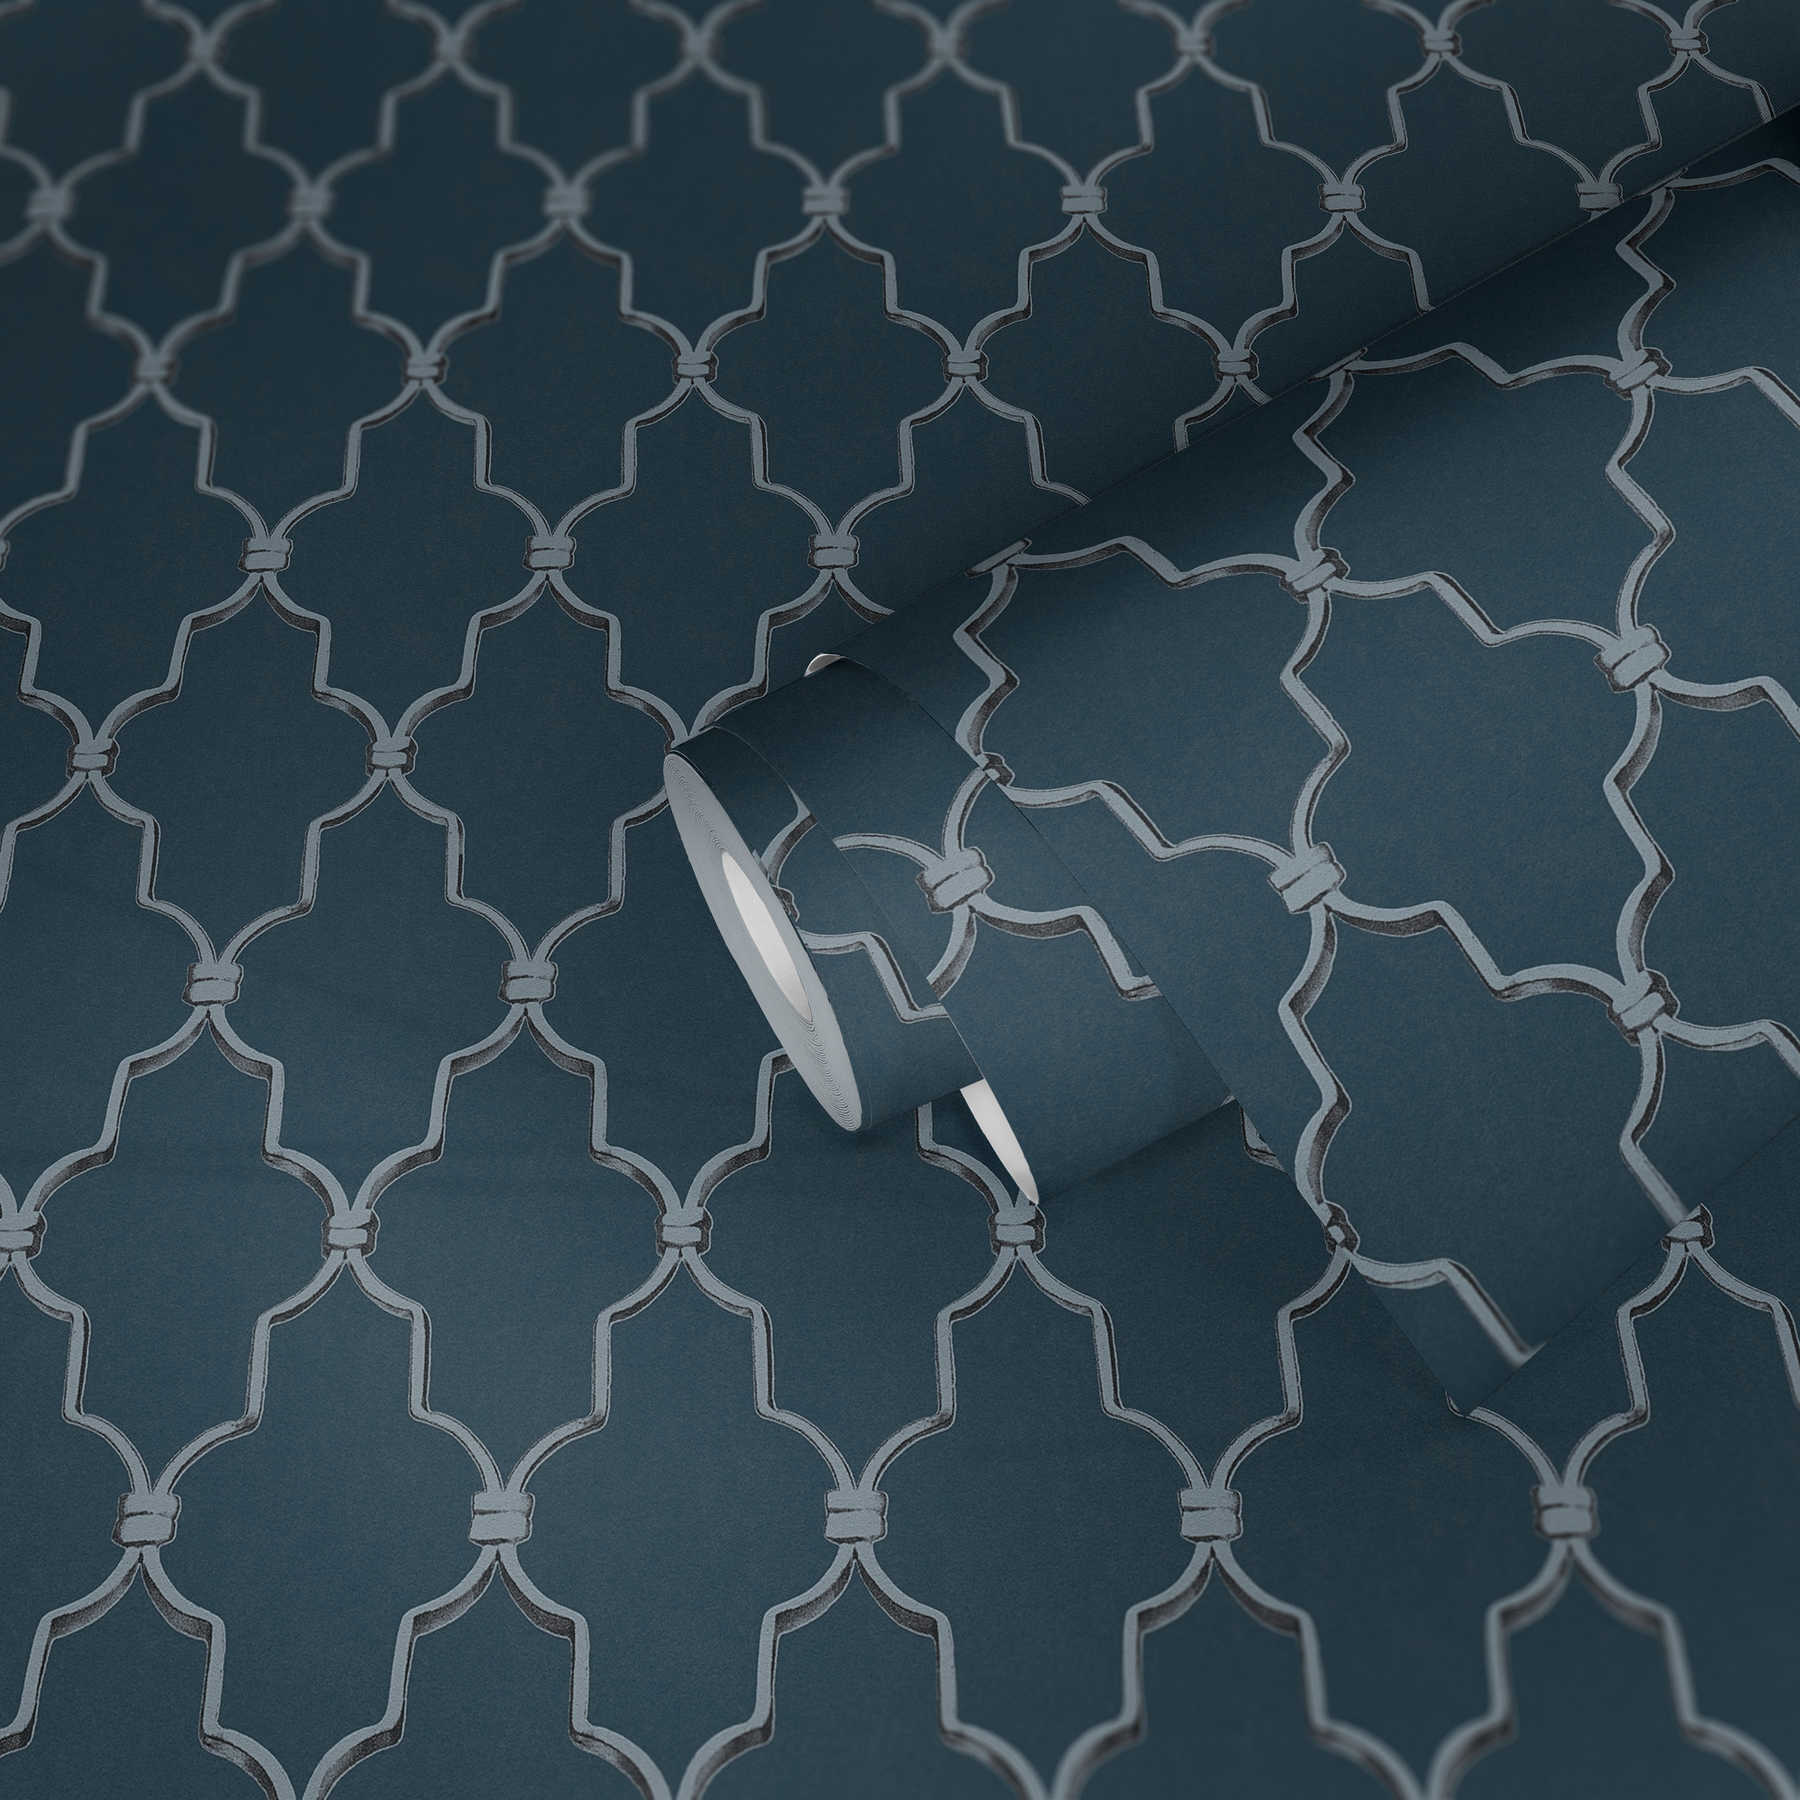             Art Deco Tapete 3D Muster & Metallic-Effekt – Blau, Grau
        